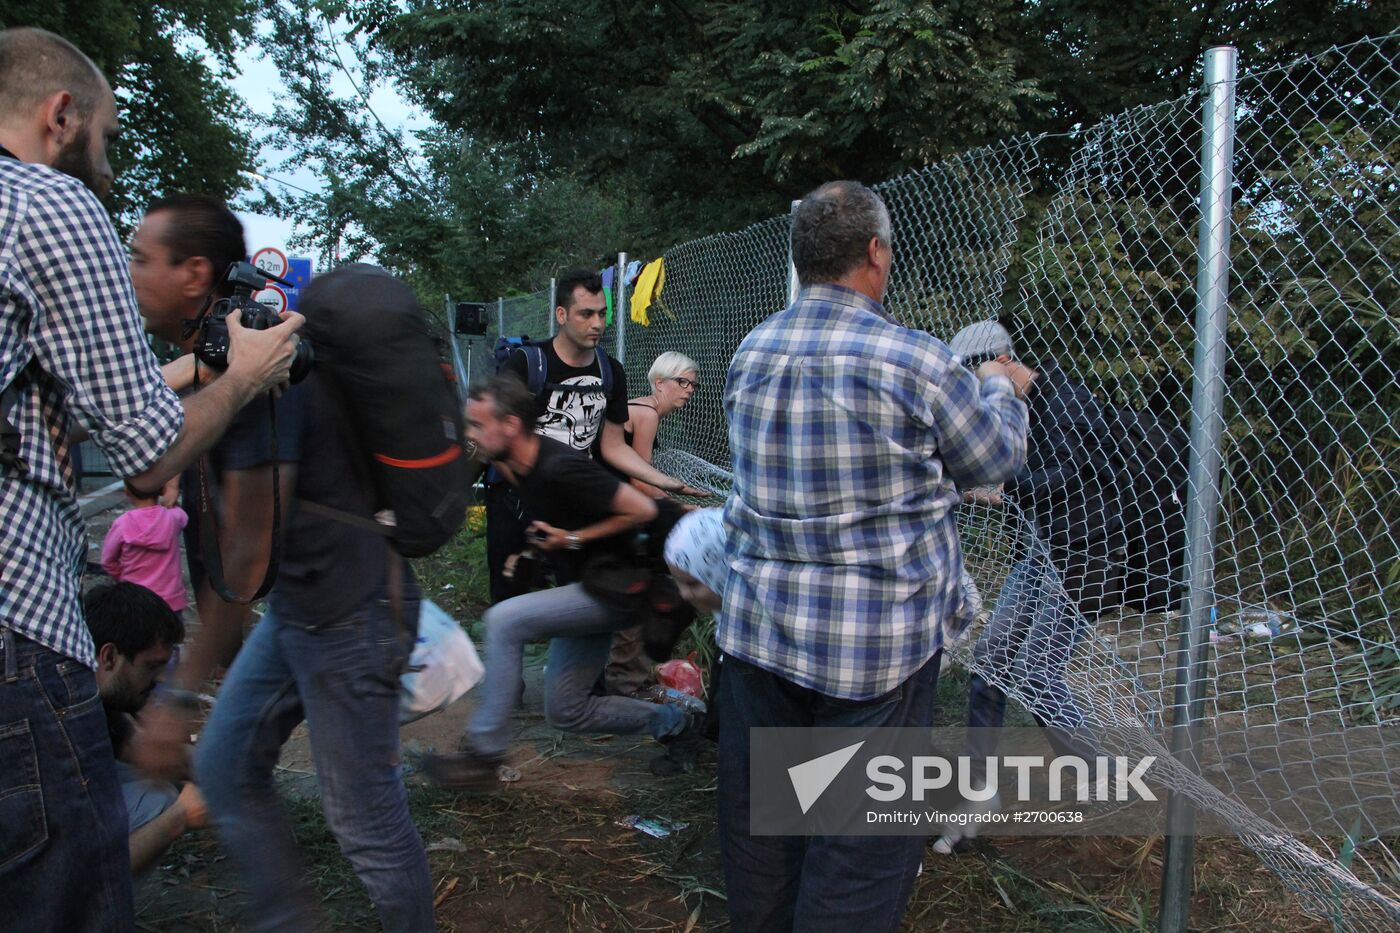 Situation on Hungarian-Serbian border